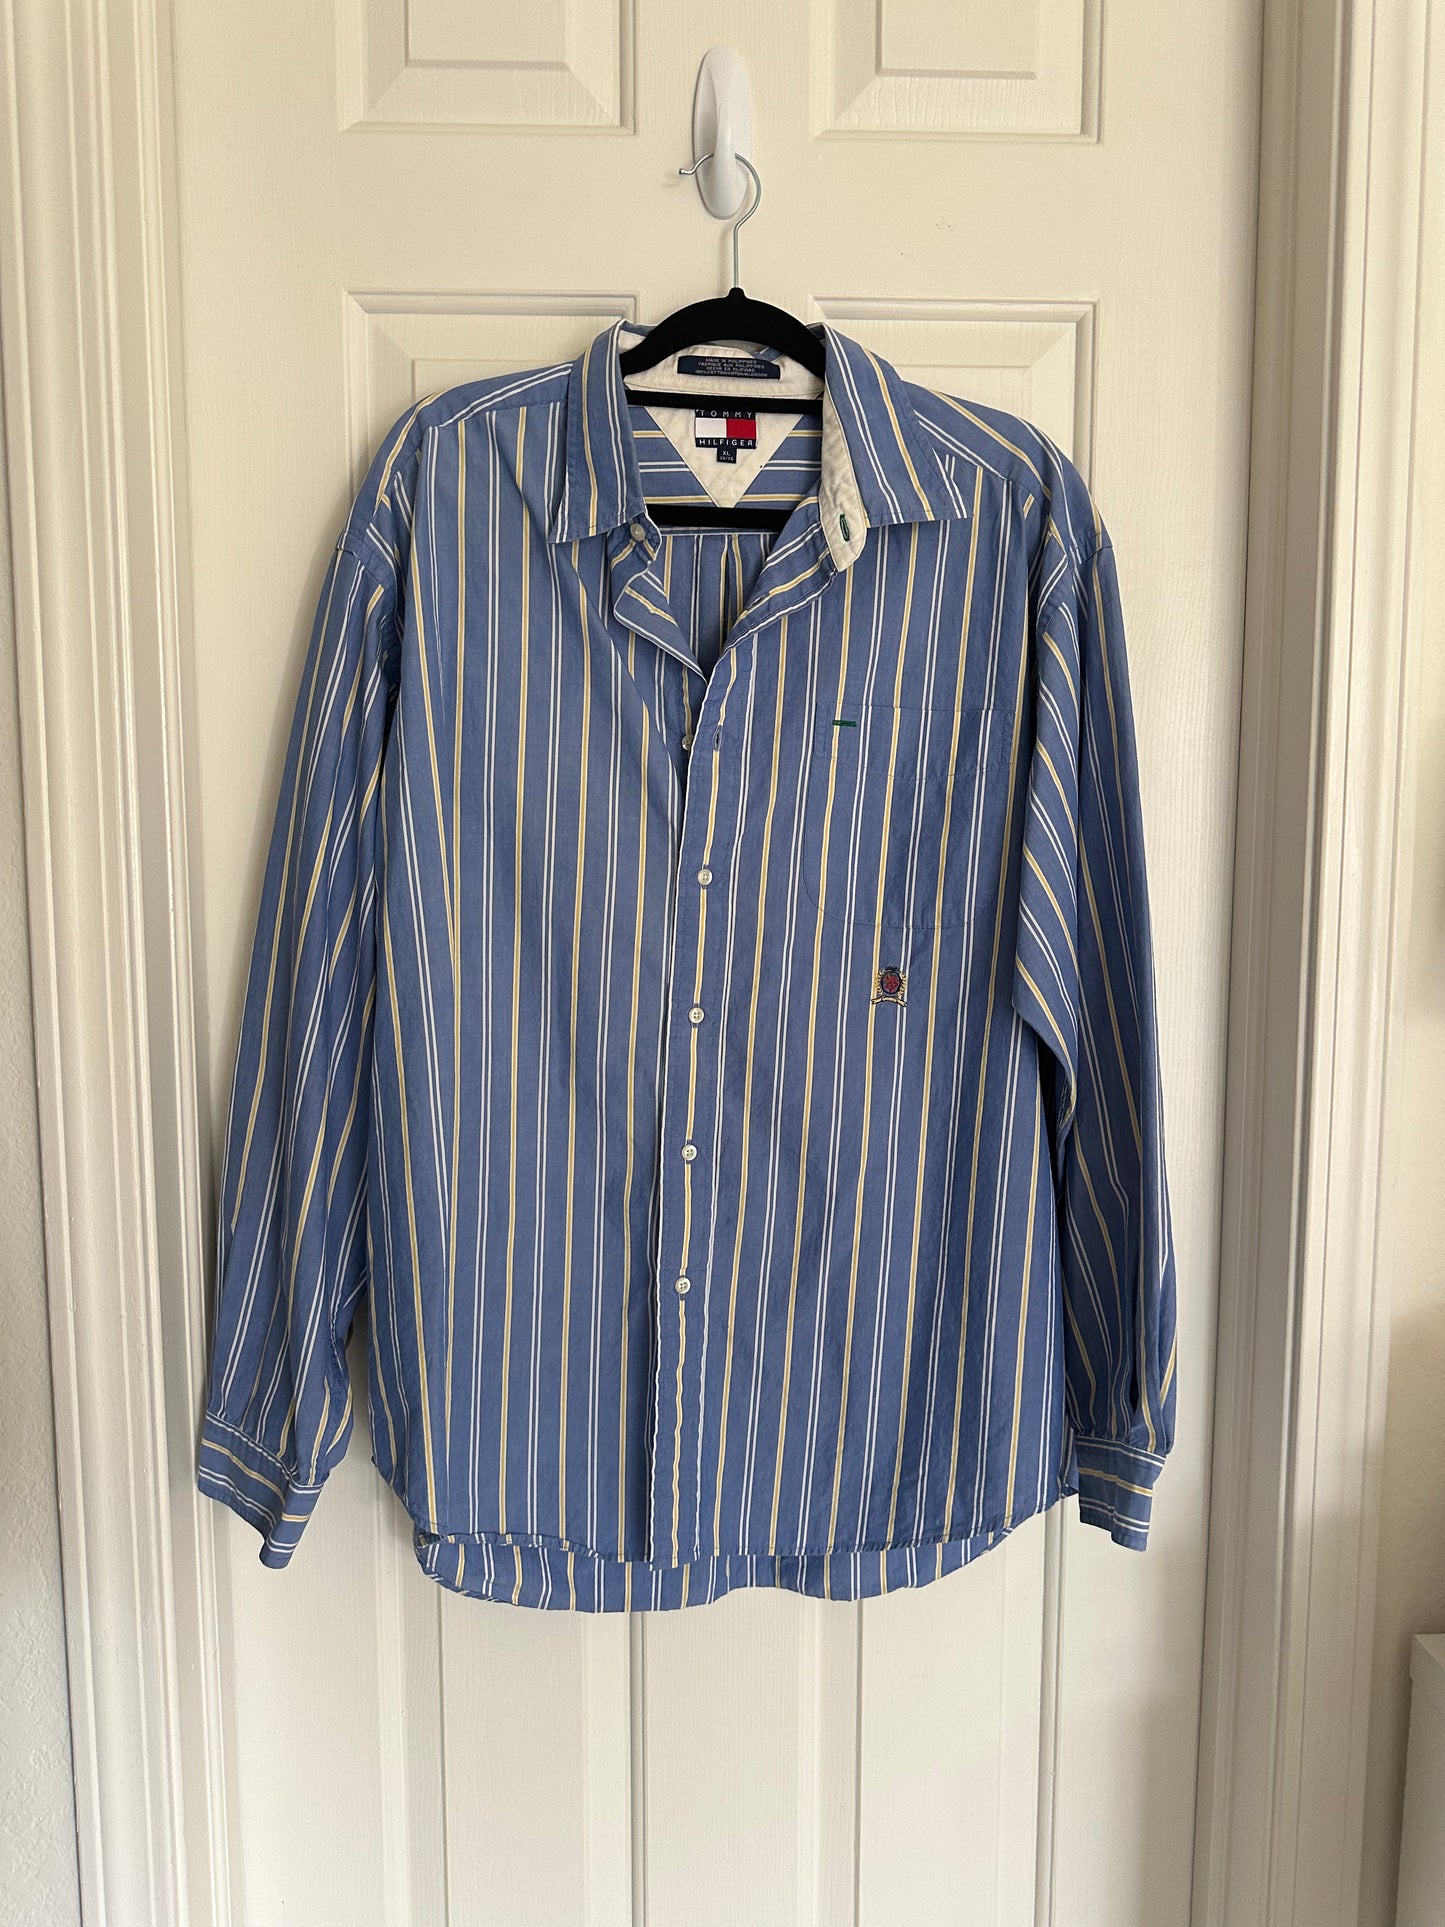 Tommy Hilfiger Men's Striped Shirt (XL)